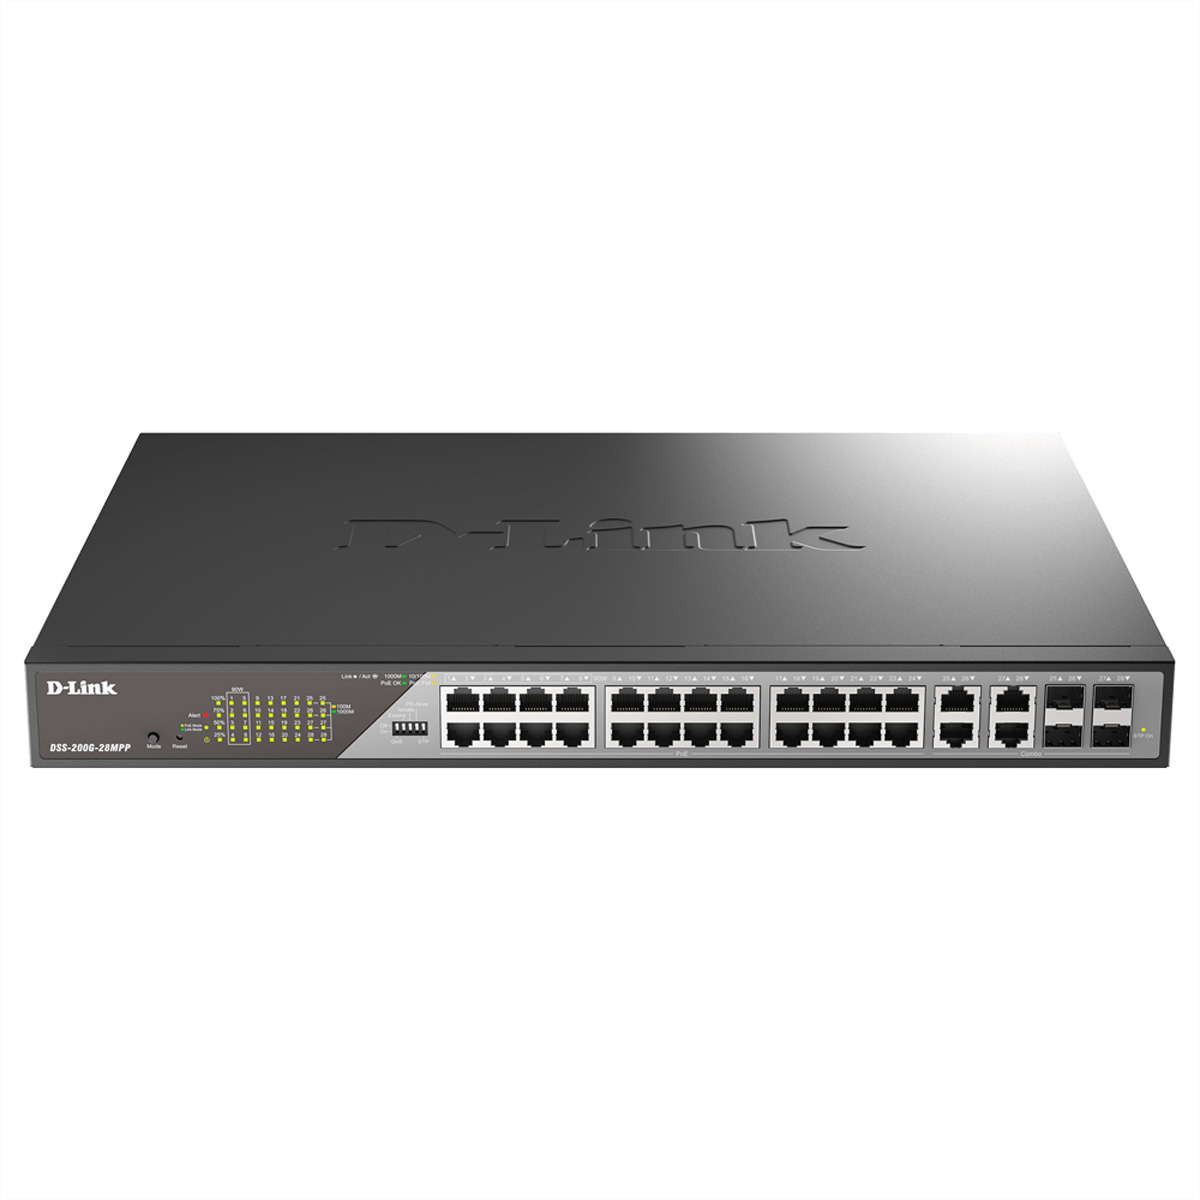 D-Link DSS-200G-28MPP/E 28-Port Switch, Desktop Gigabit PoE Surveillance 518W